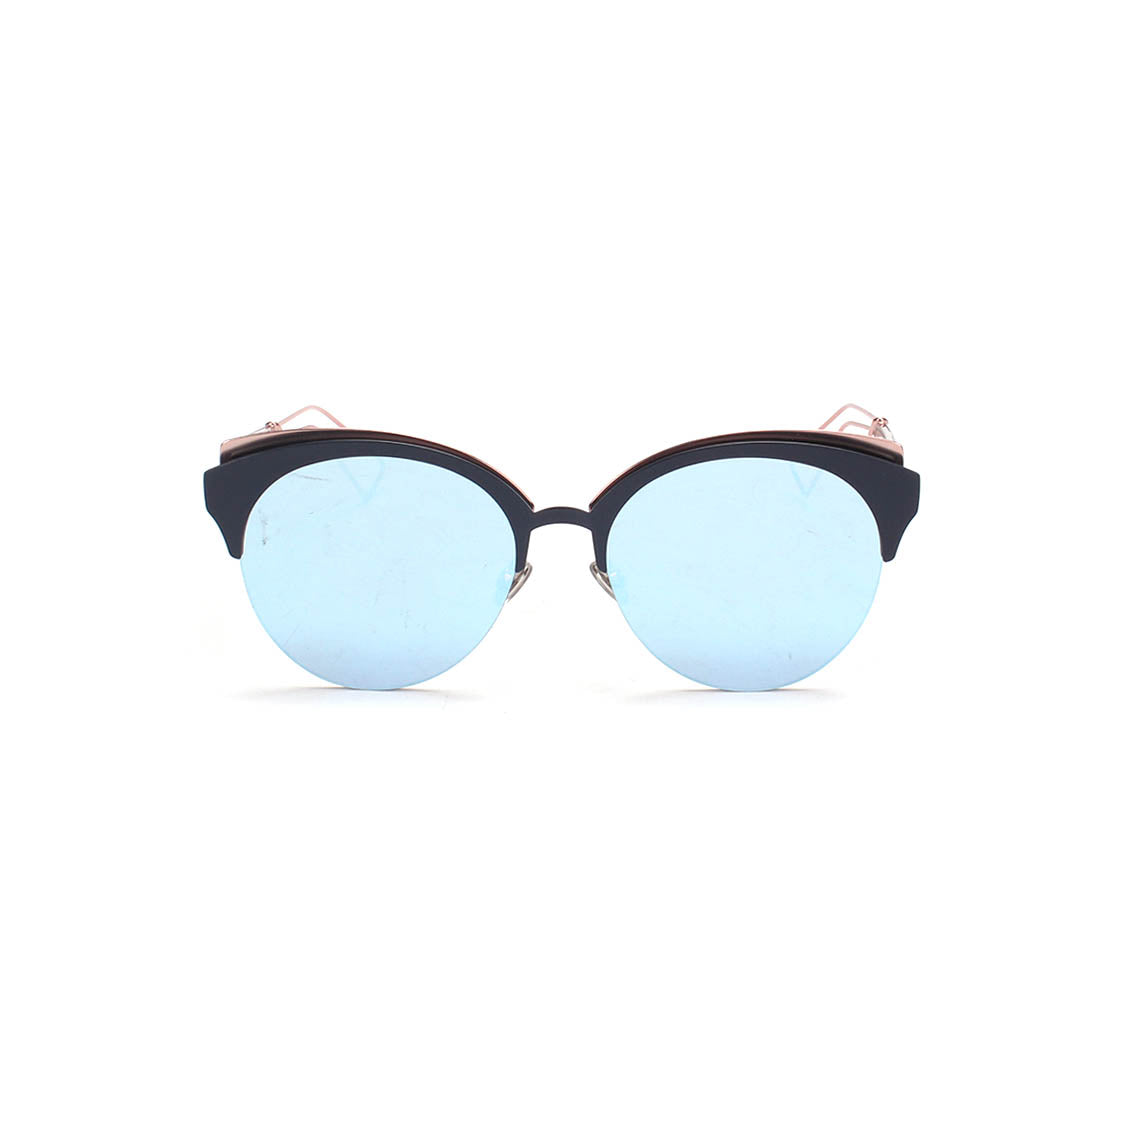 DioramaClub Mirrored Sunglasses